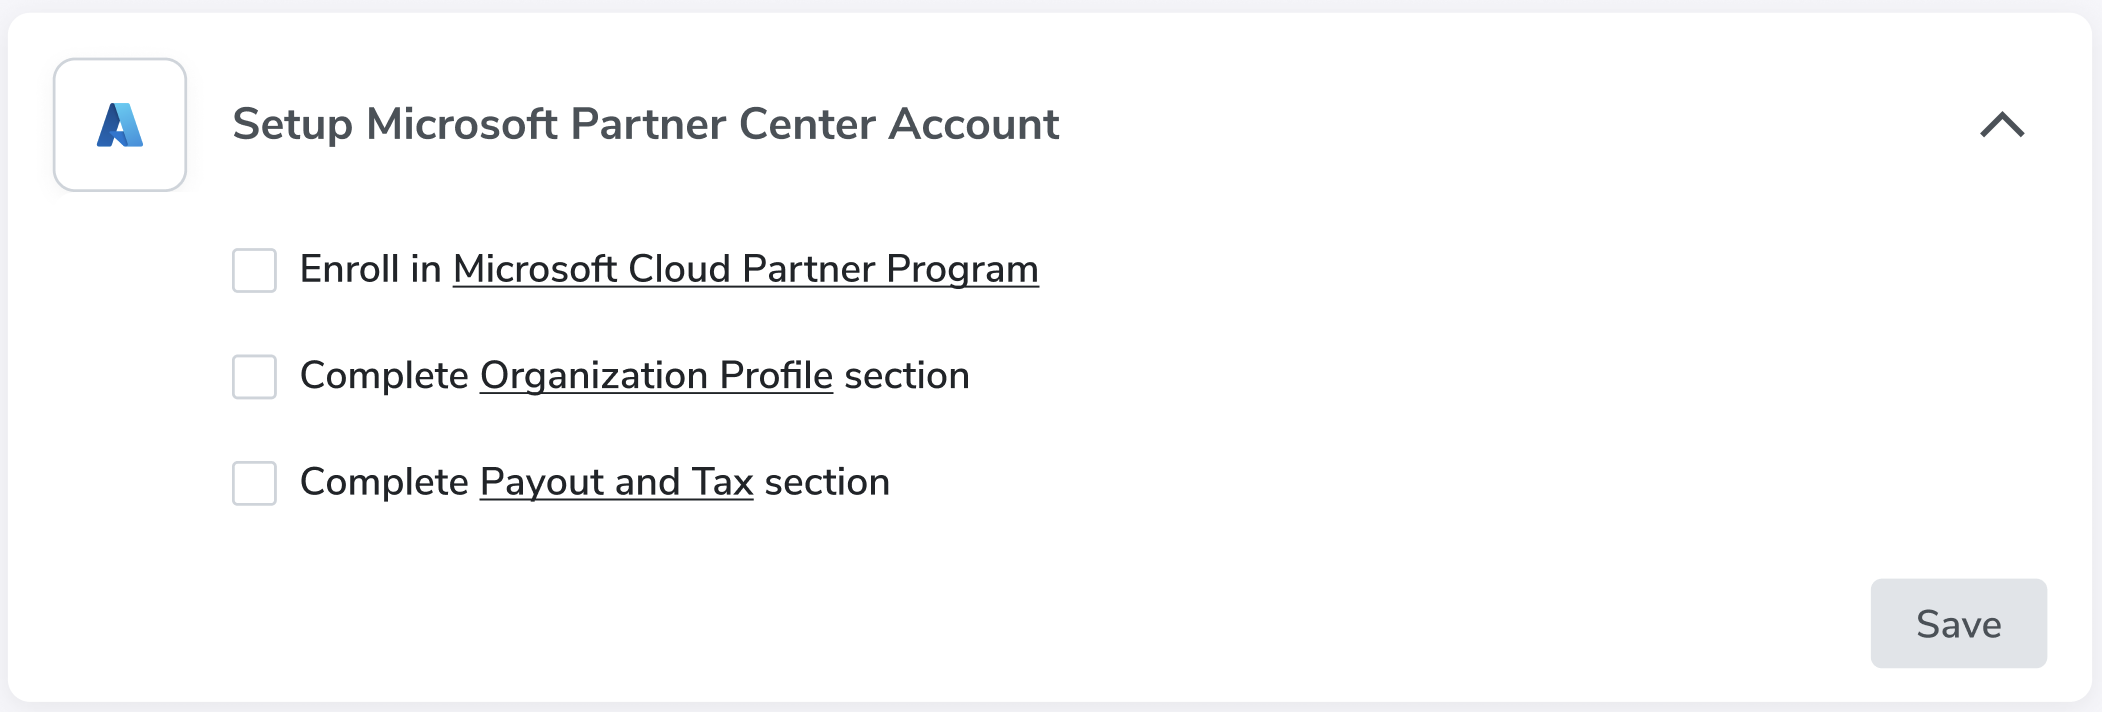 Setup Microsoft Partner Center Account section in Azure Cloud Setup